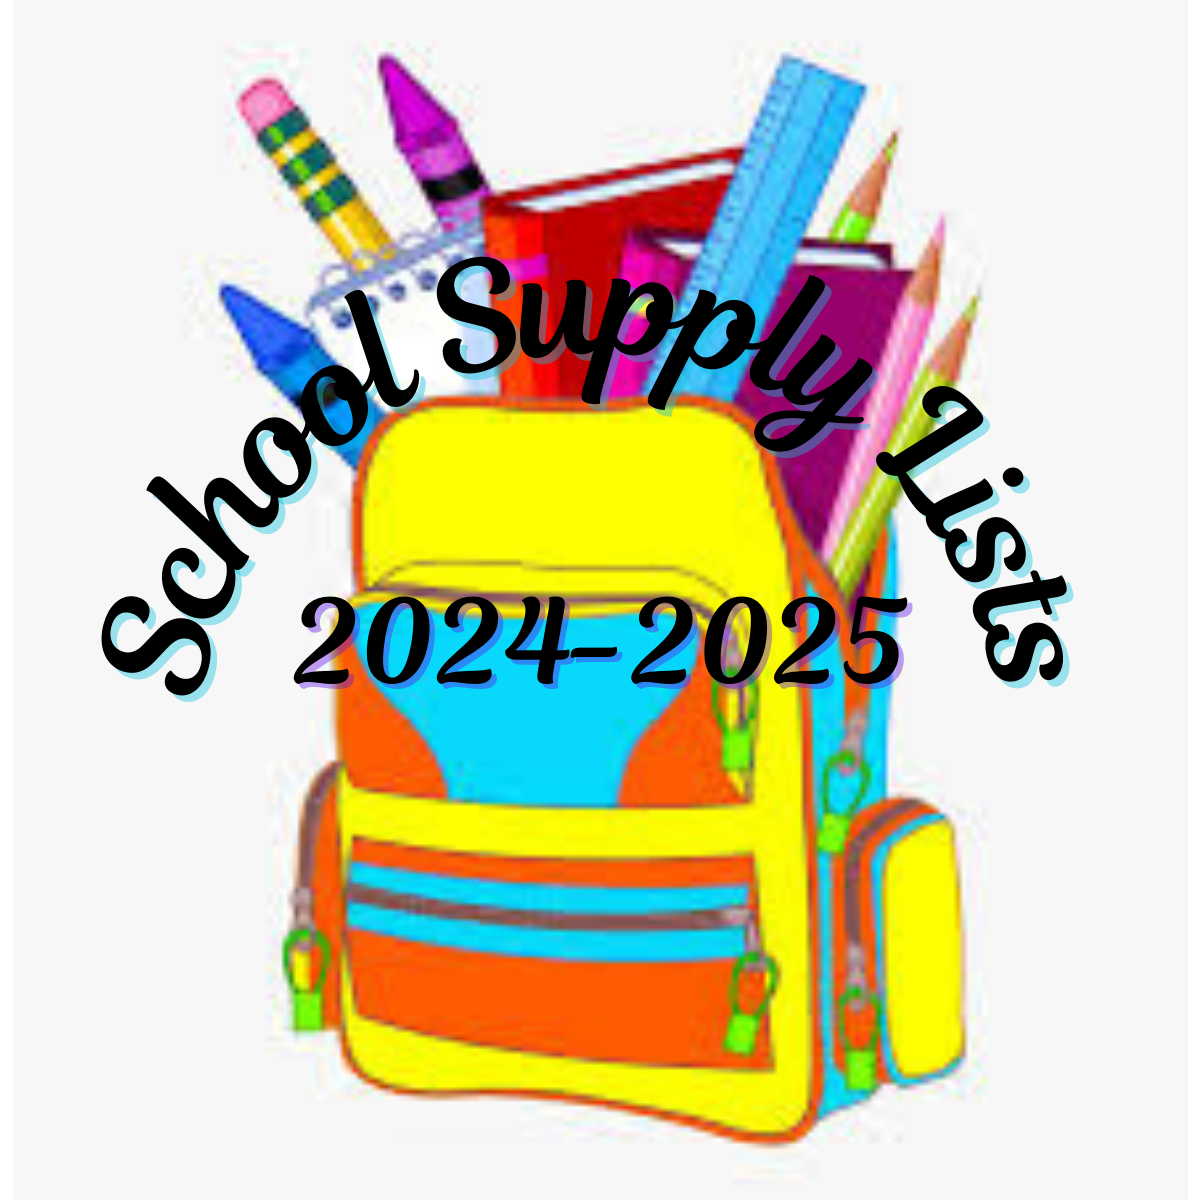 School Supply Lists 2024-2025